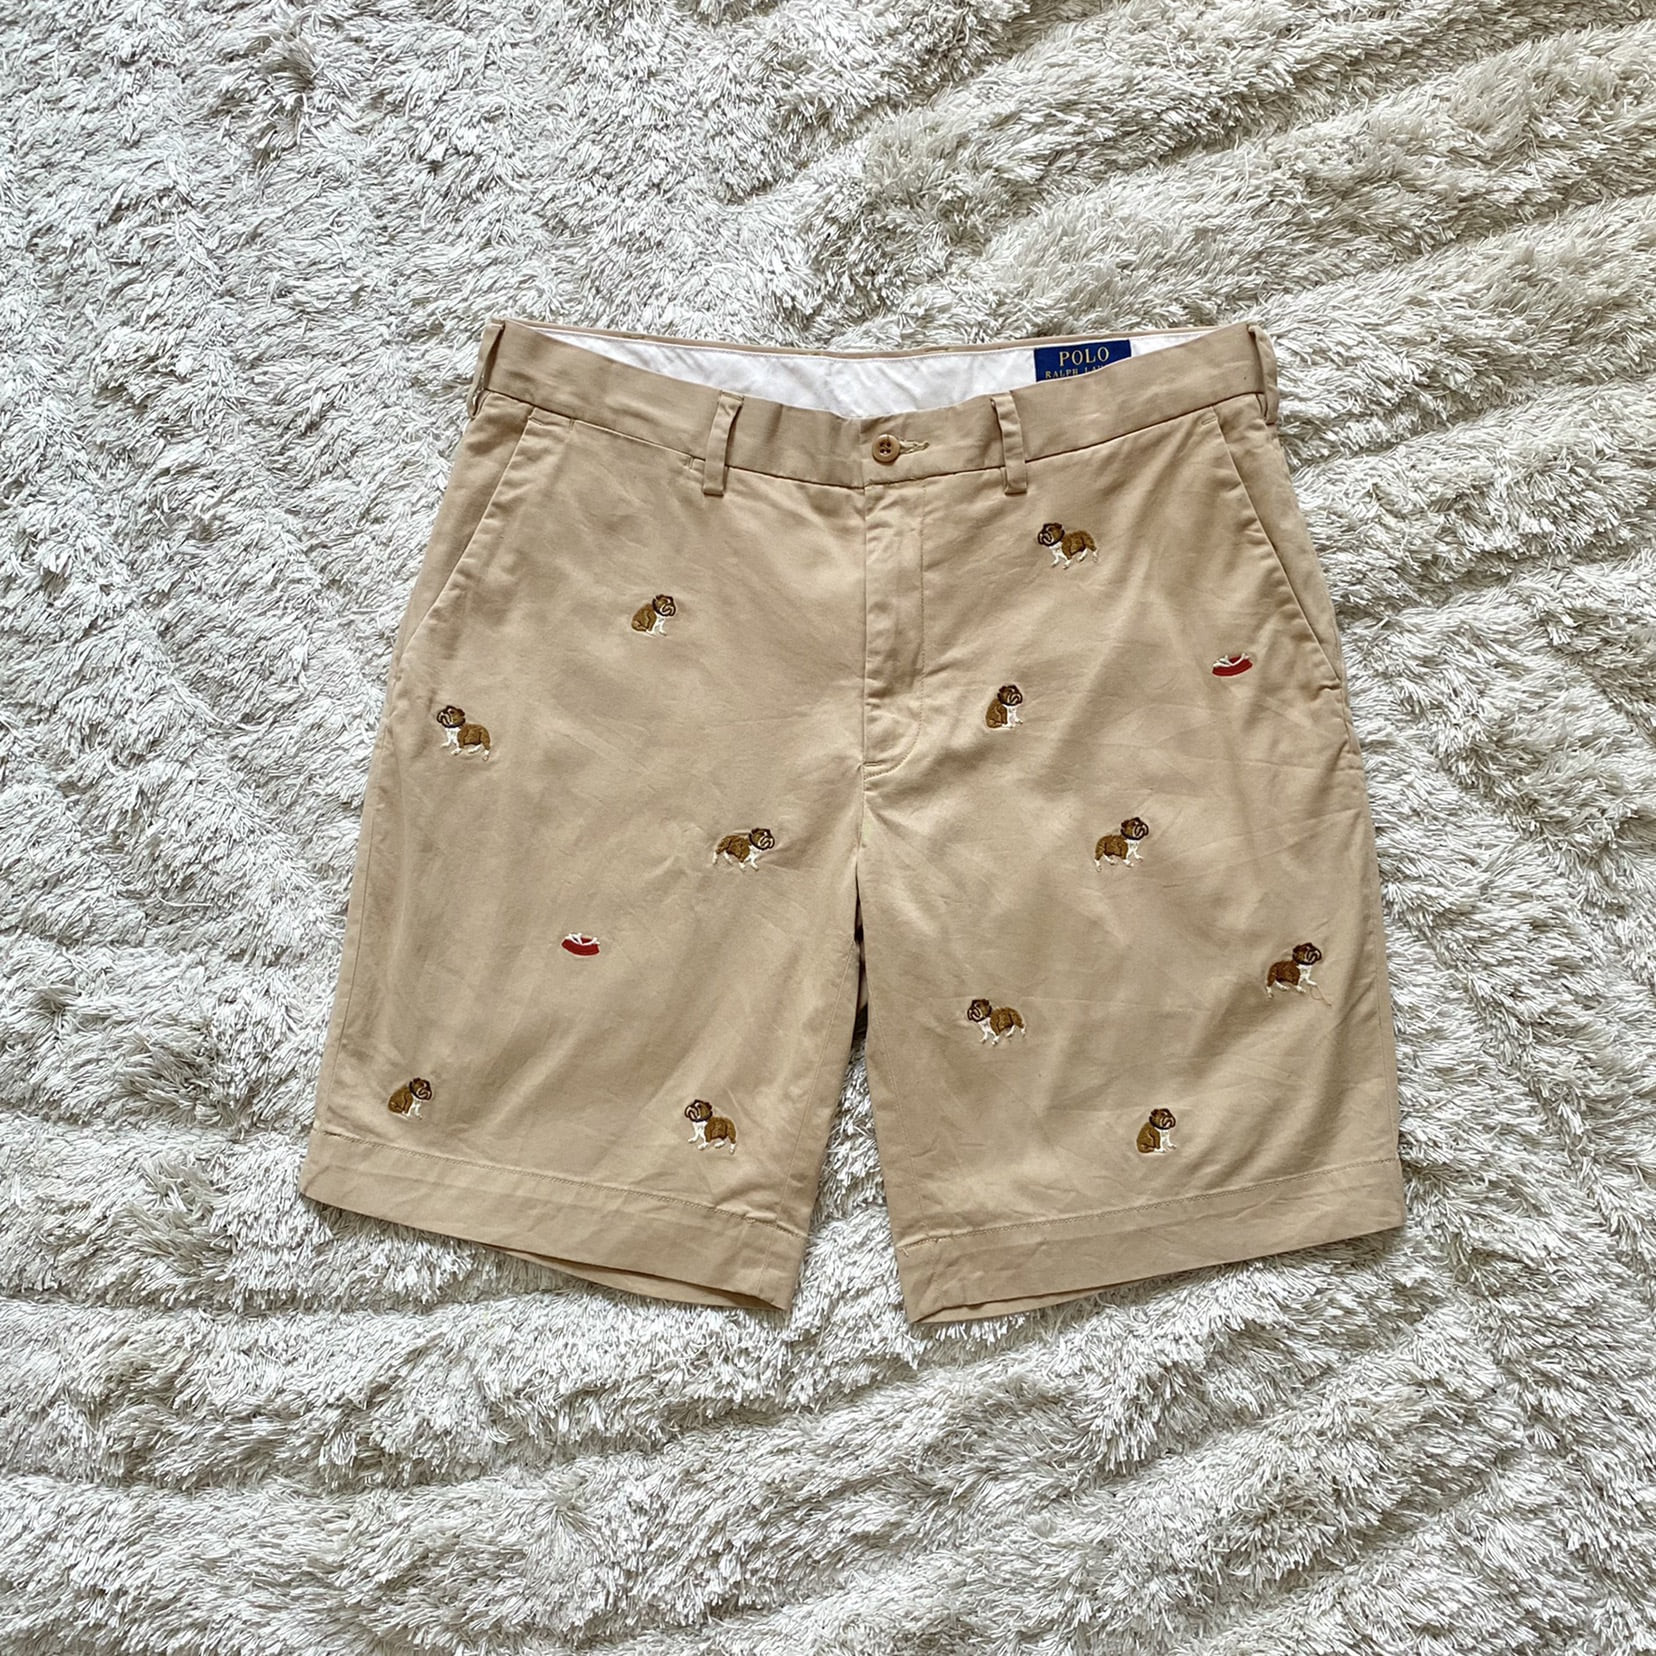 Polo Ralph Lauren Bulldog Embroidered Shorts 32 - 체리피커